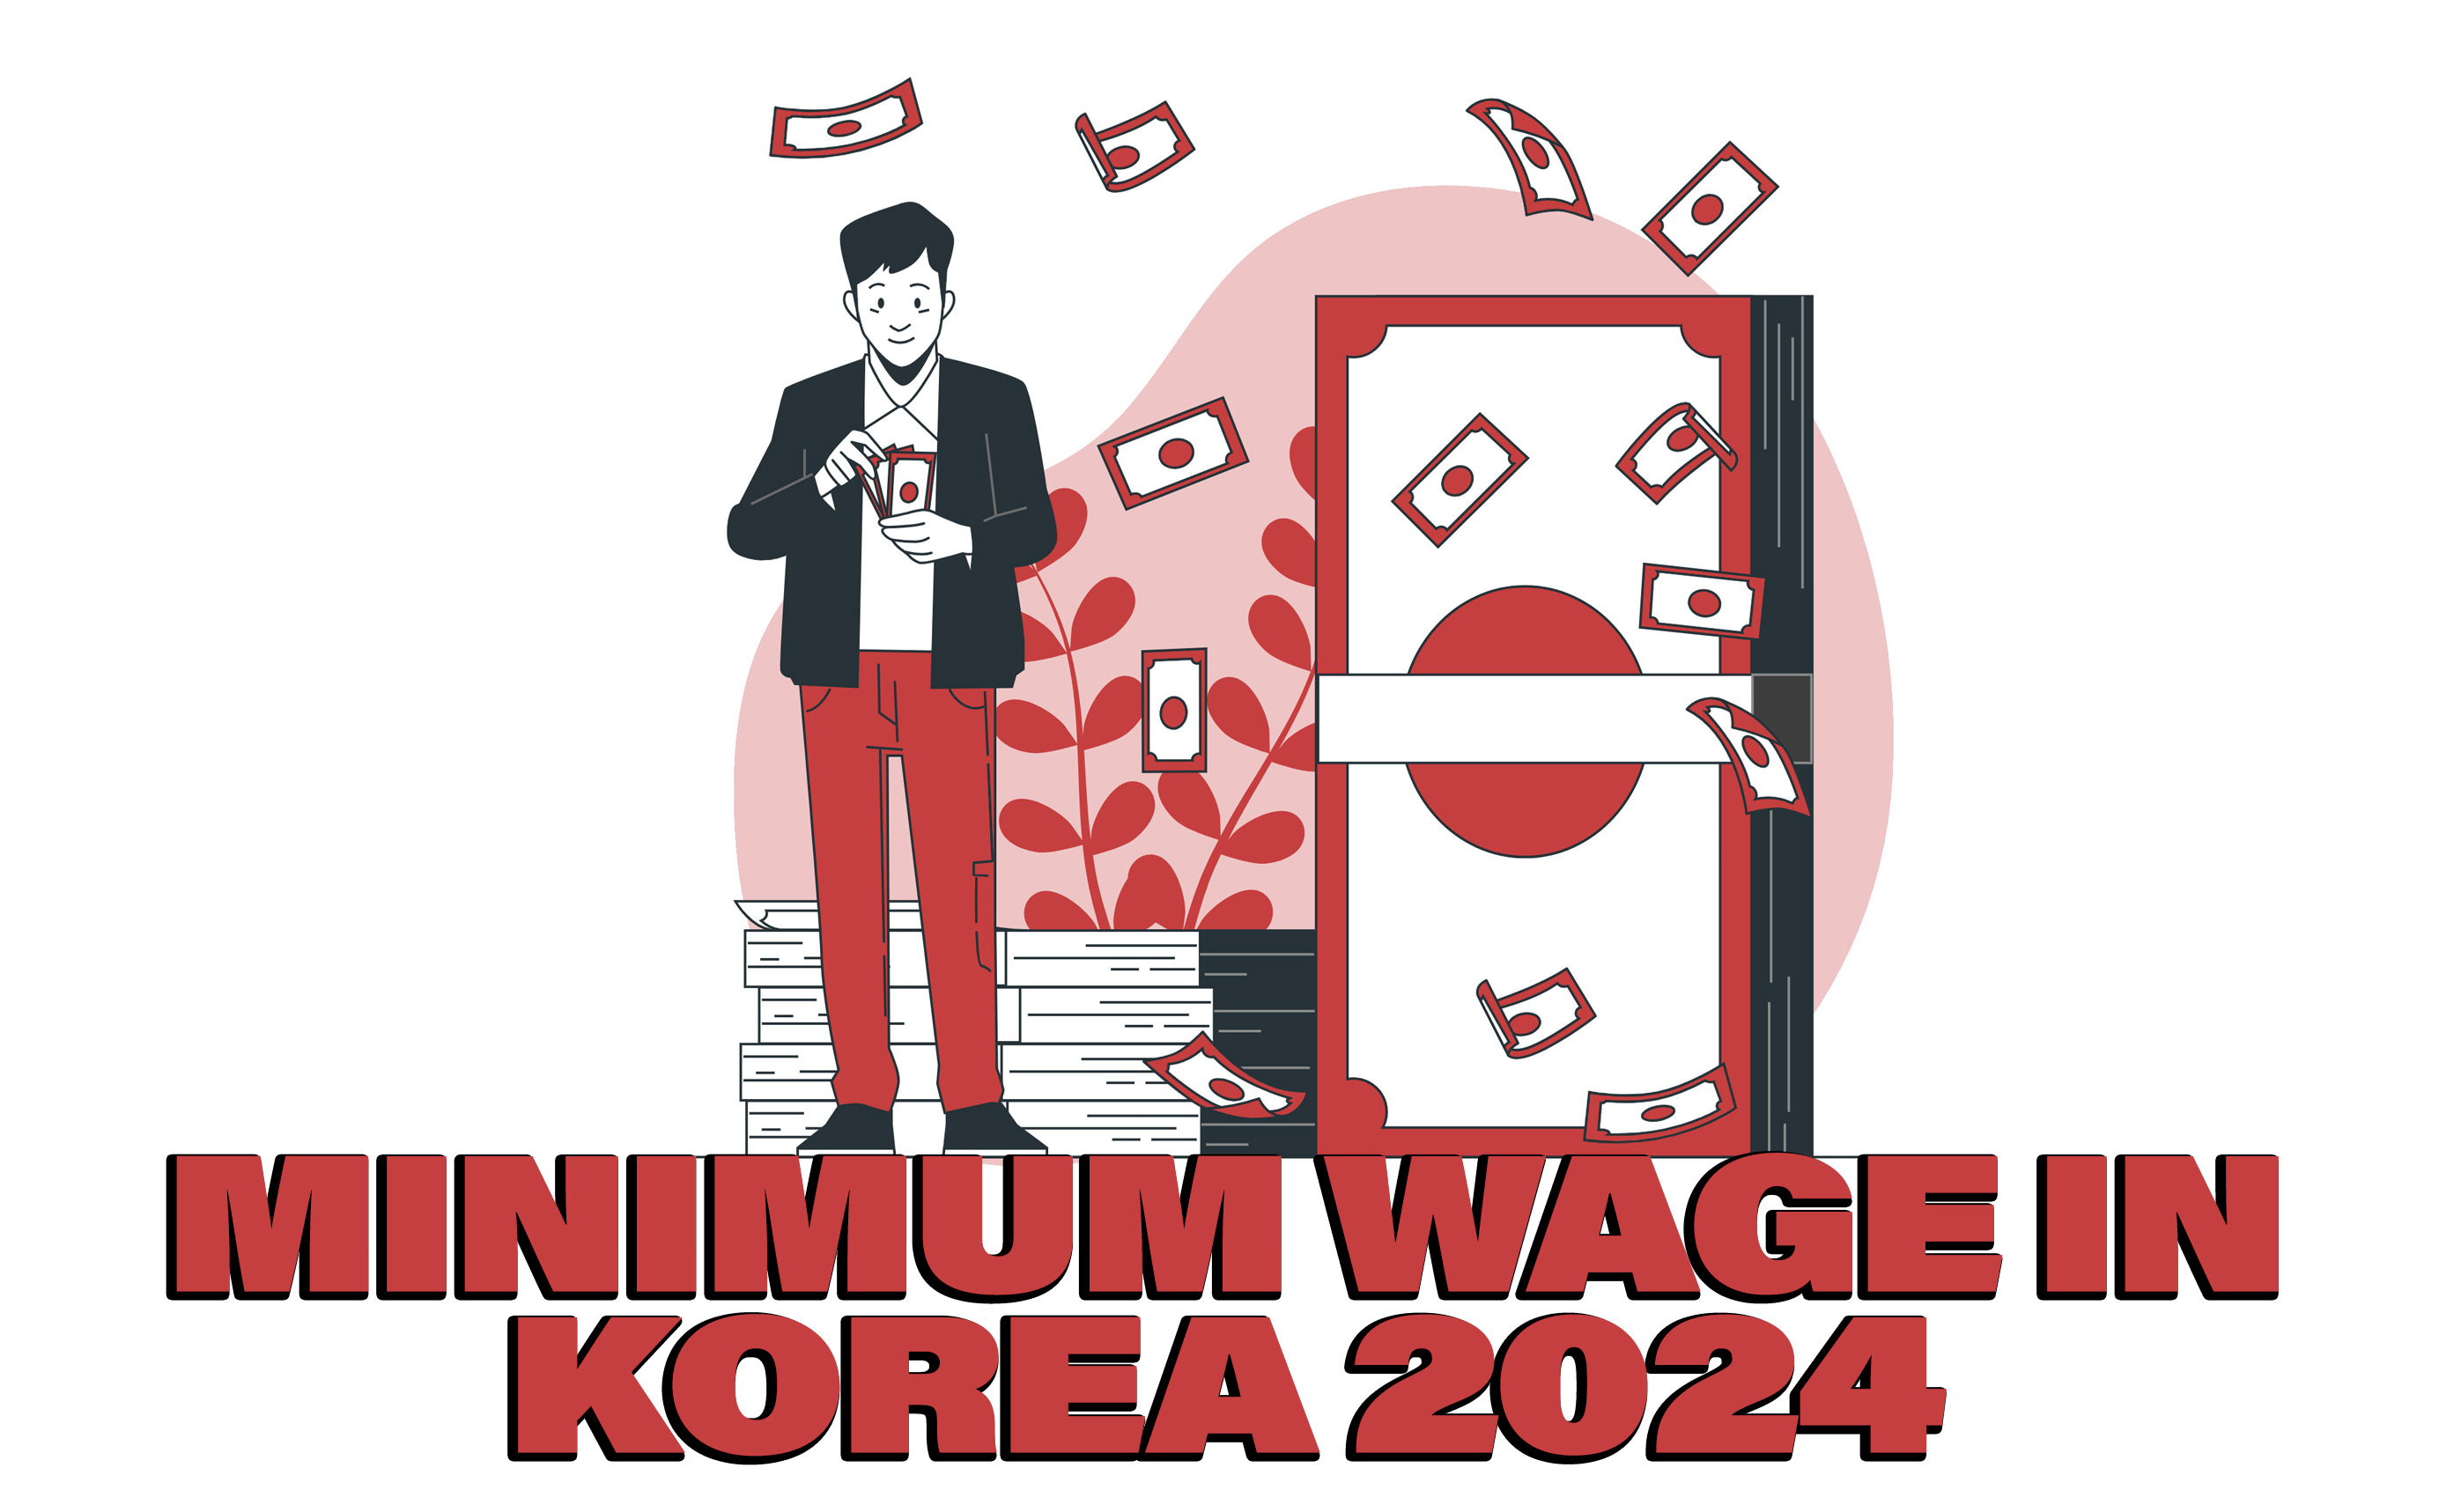 Minimum wage.jpg